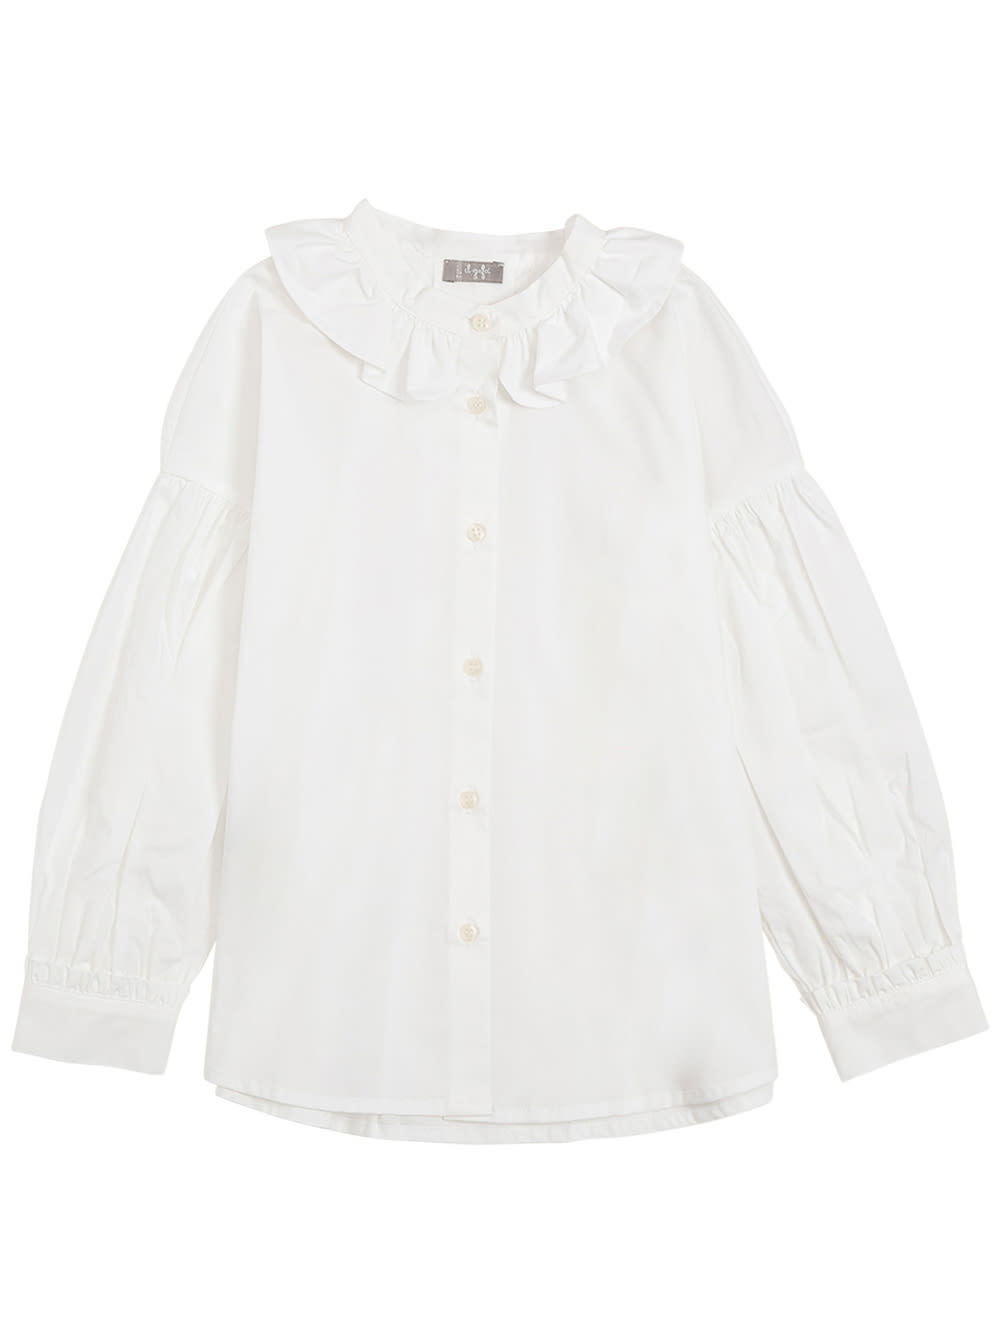 Il Gufo White Cotton Shirt With Ruffles